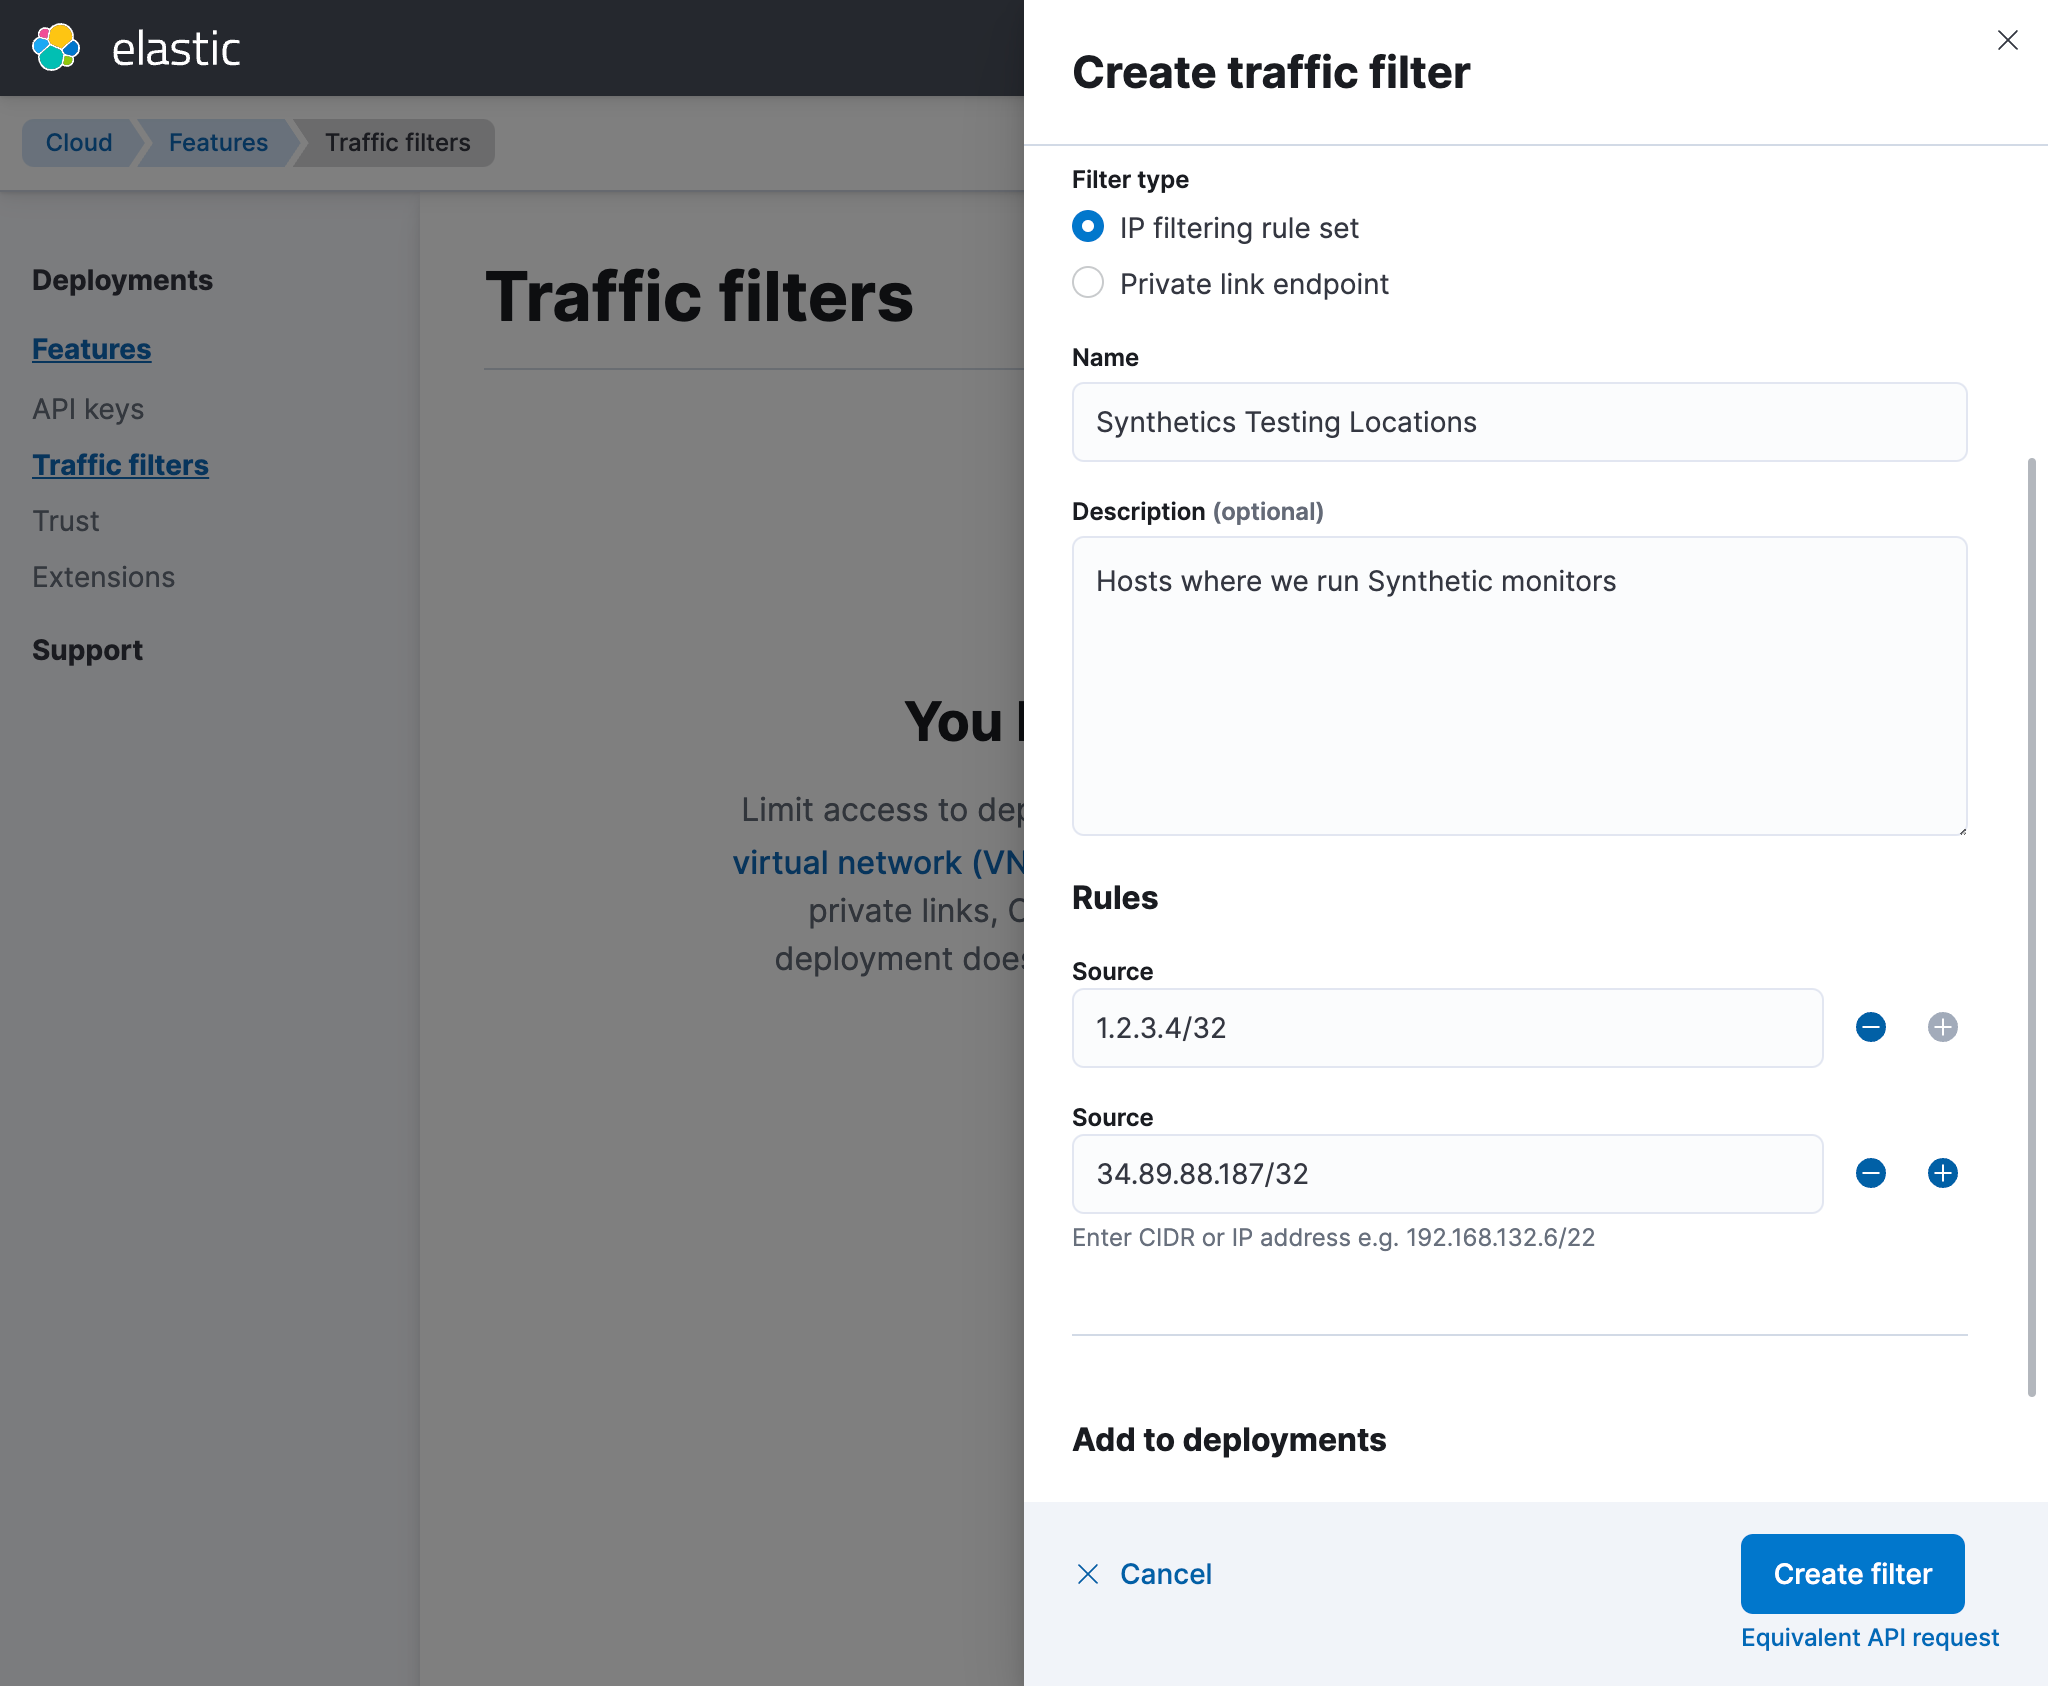 Create a traffic filter in https://www.elastic.co/guide/en/cloud/current